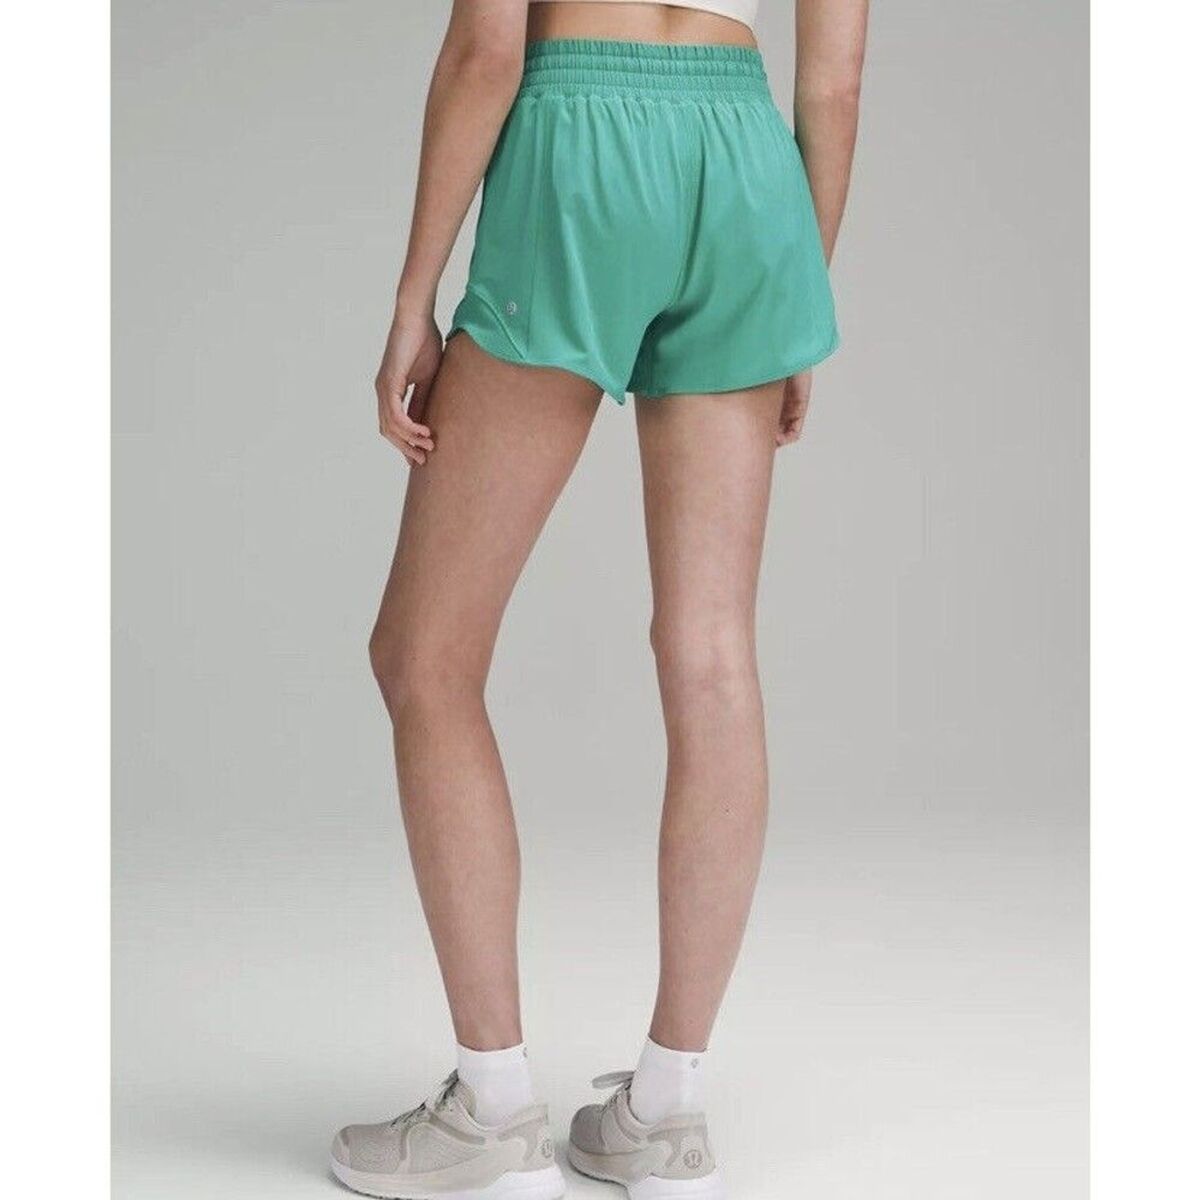 Lululemon Hotty Hot High Rise Lined Shorts Size 2 Kelly Green 4” Running Gym